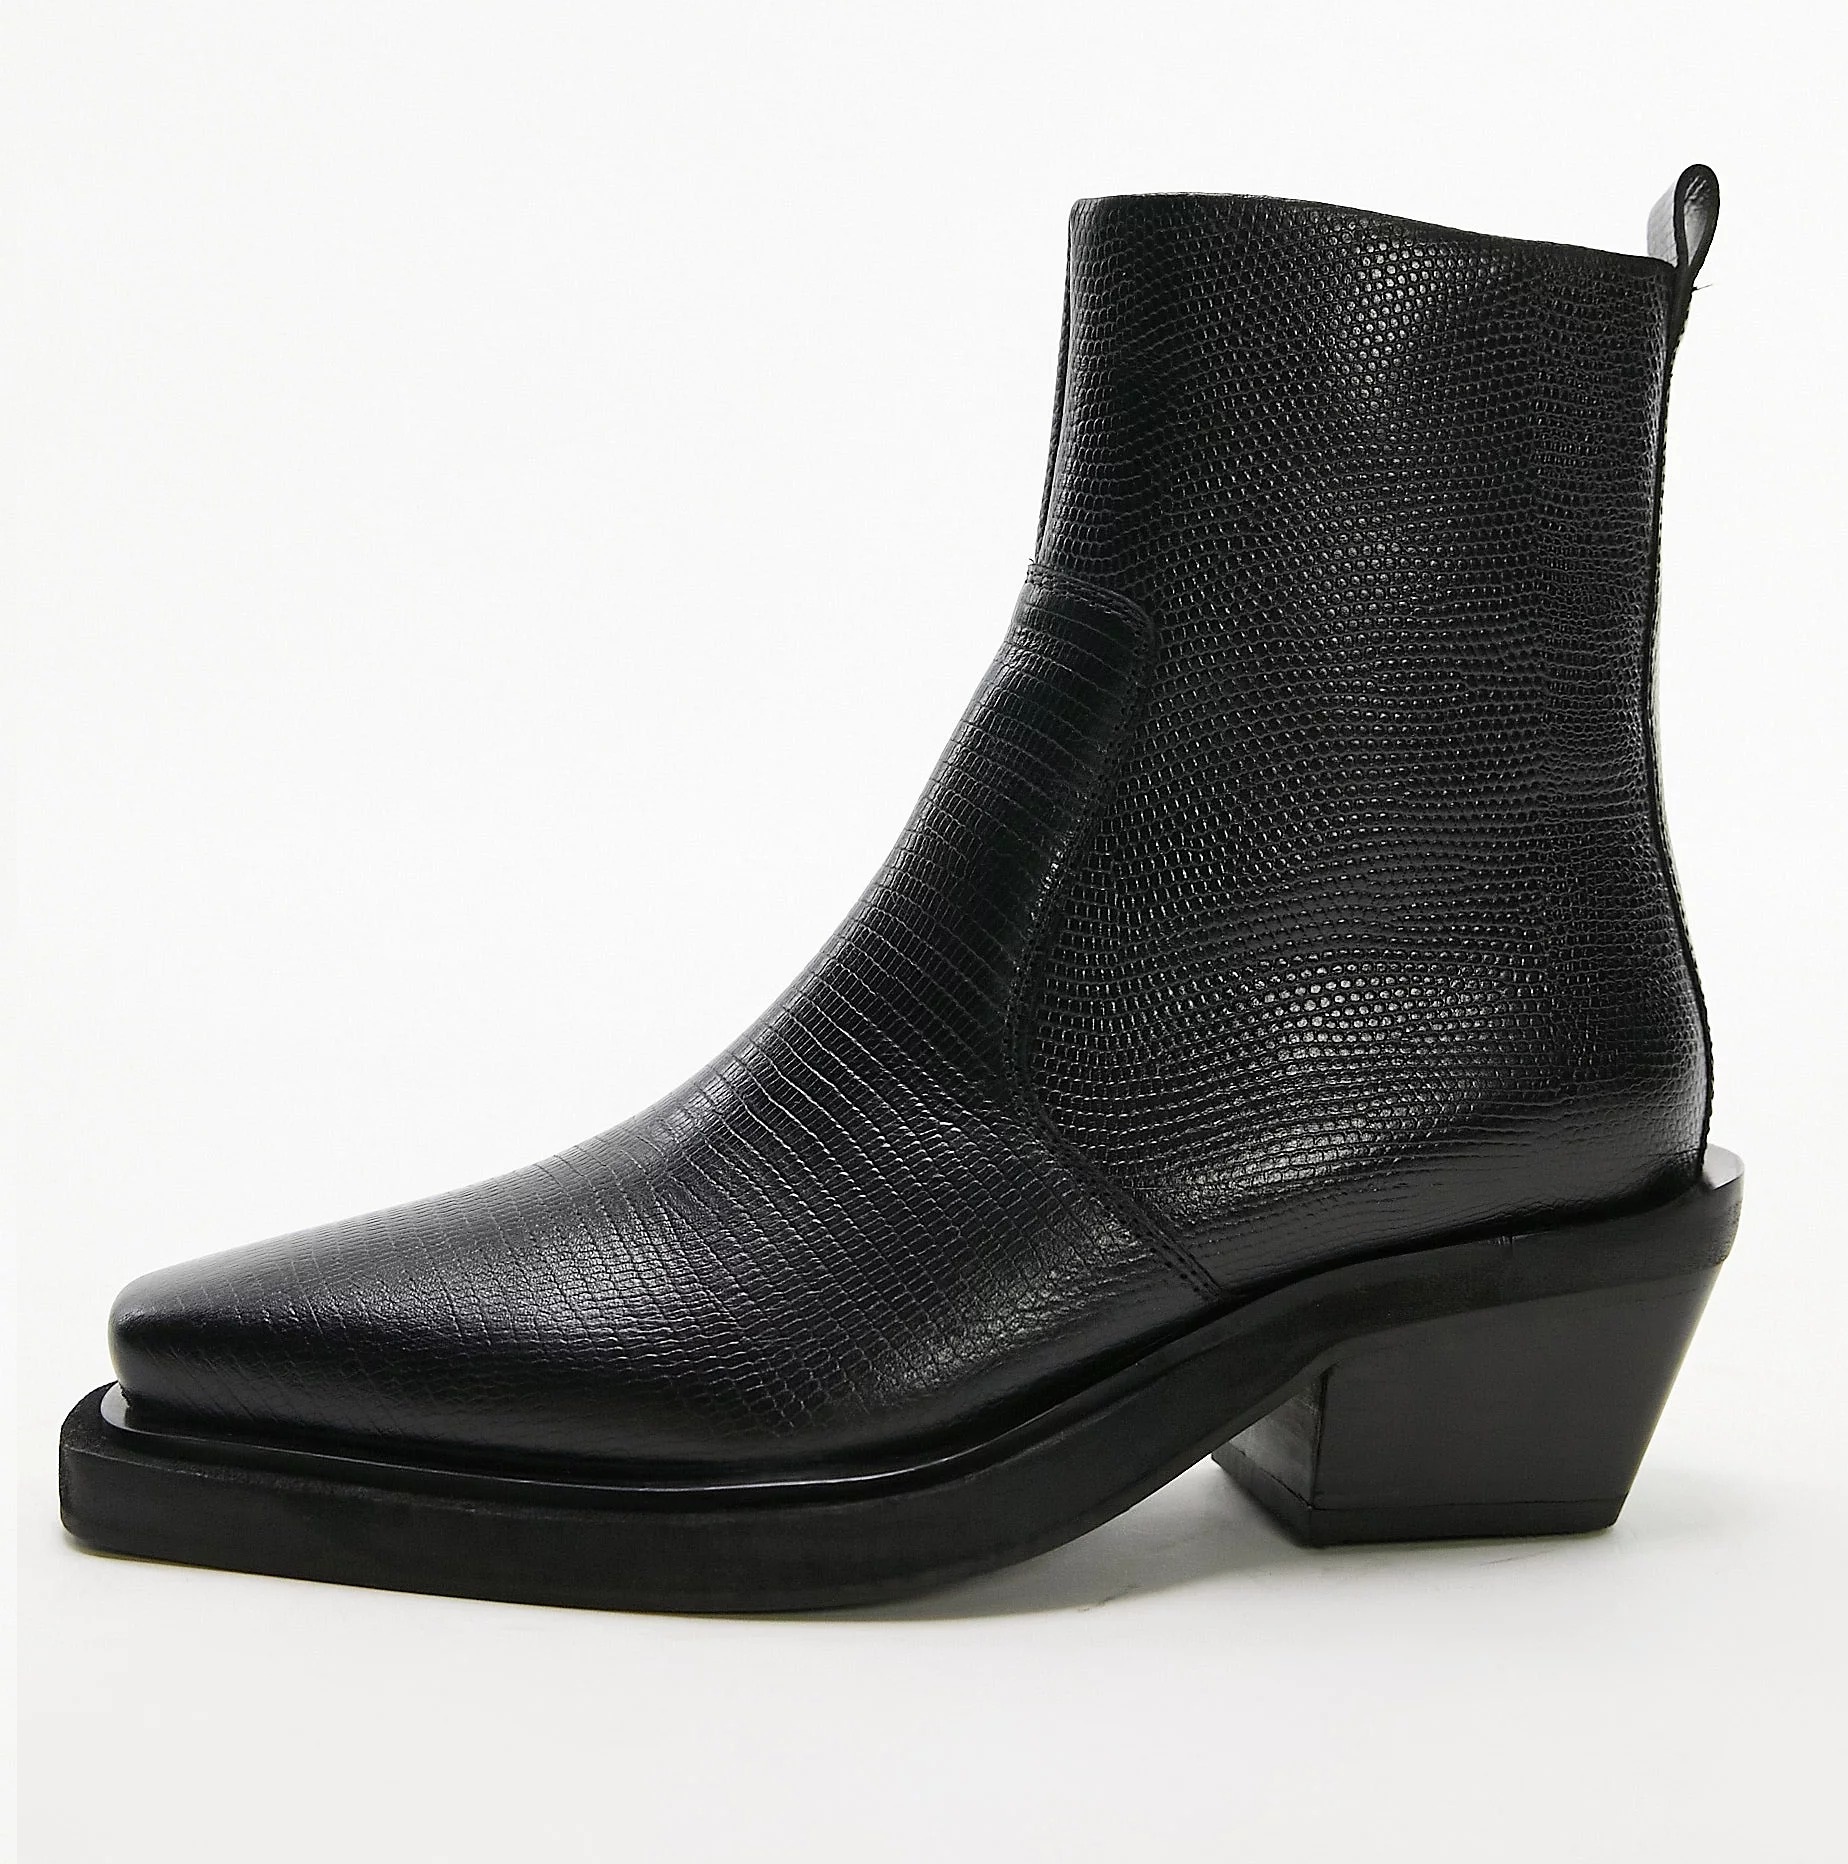 Ботильоны Topshop Lara Leather Western Style Ankle, черный цена и фото